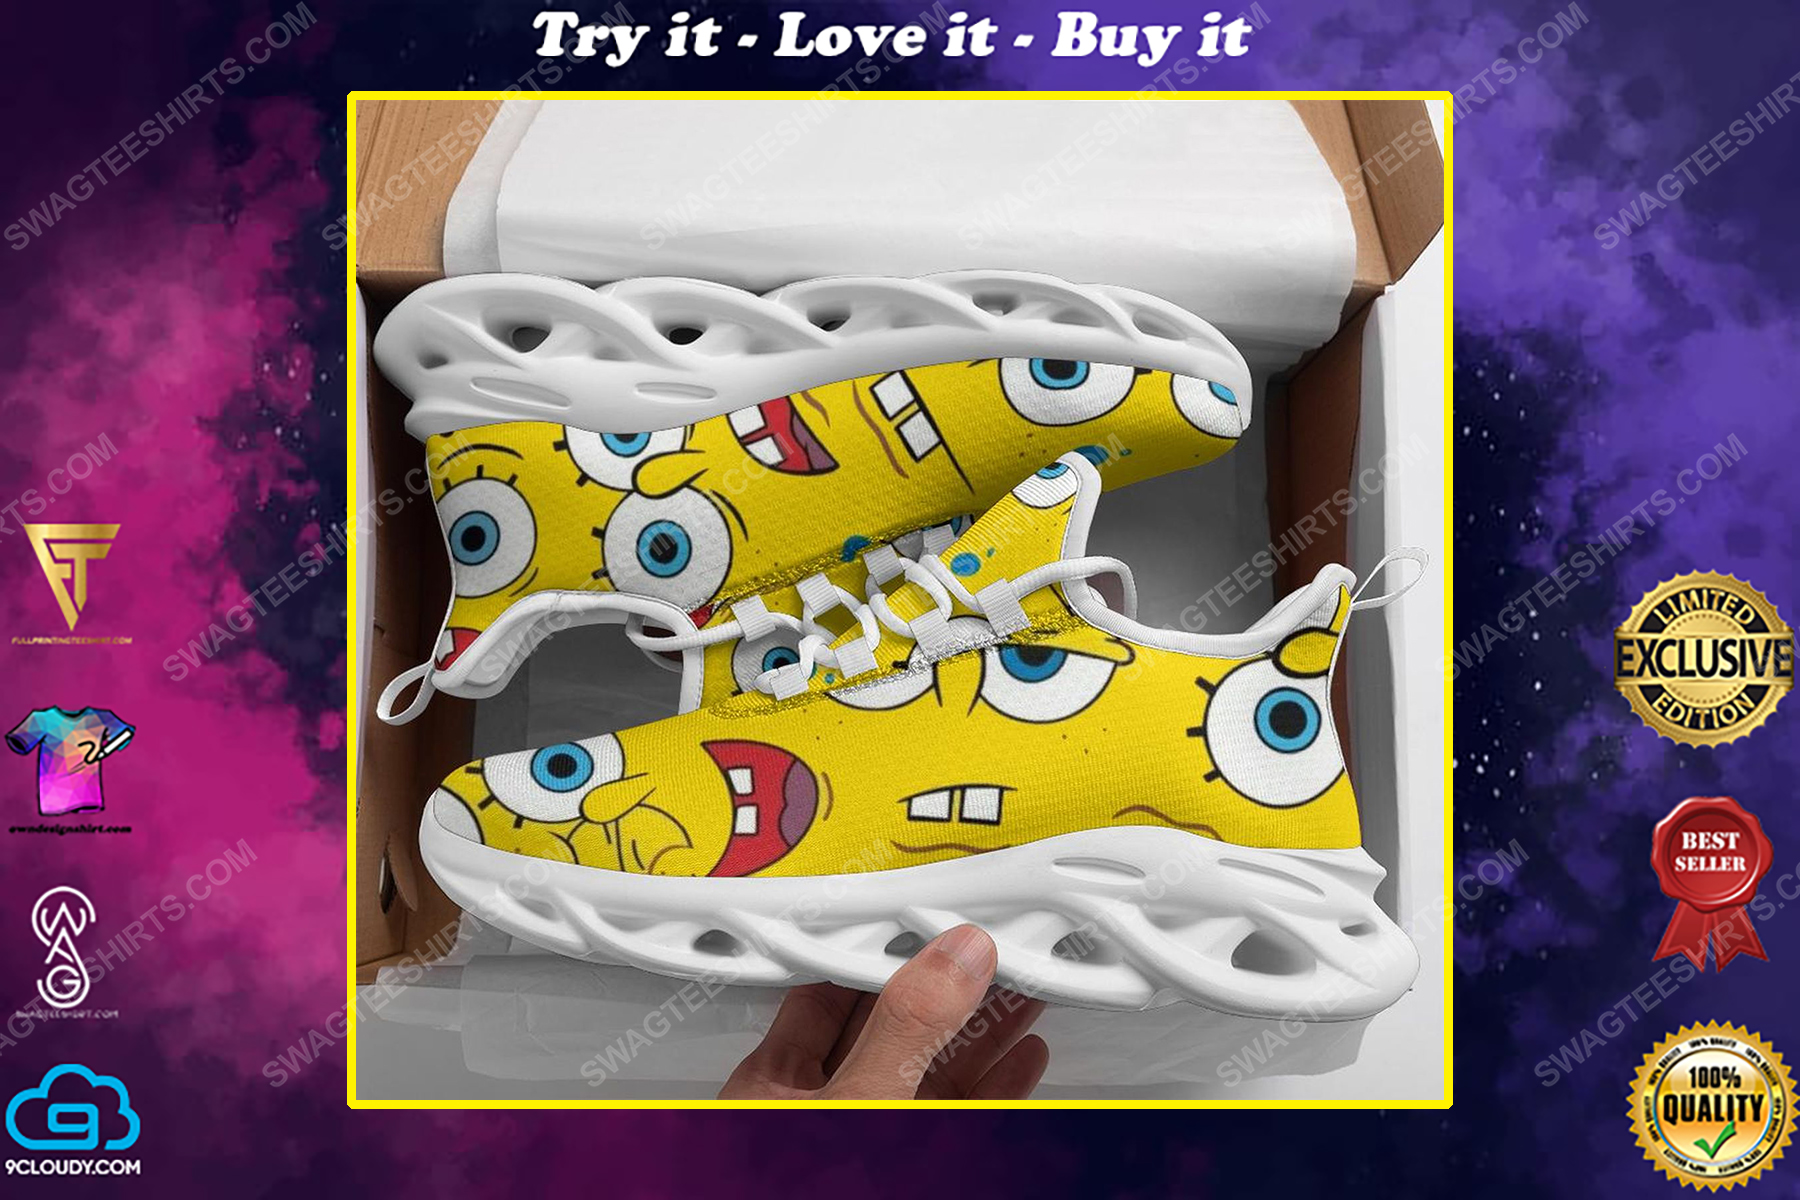 The spongebob squarepants movie max soul shoes